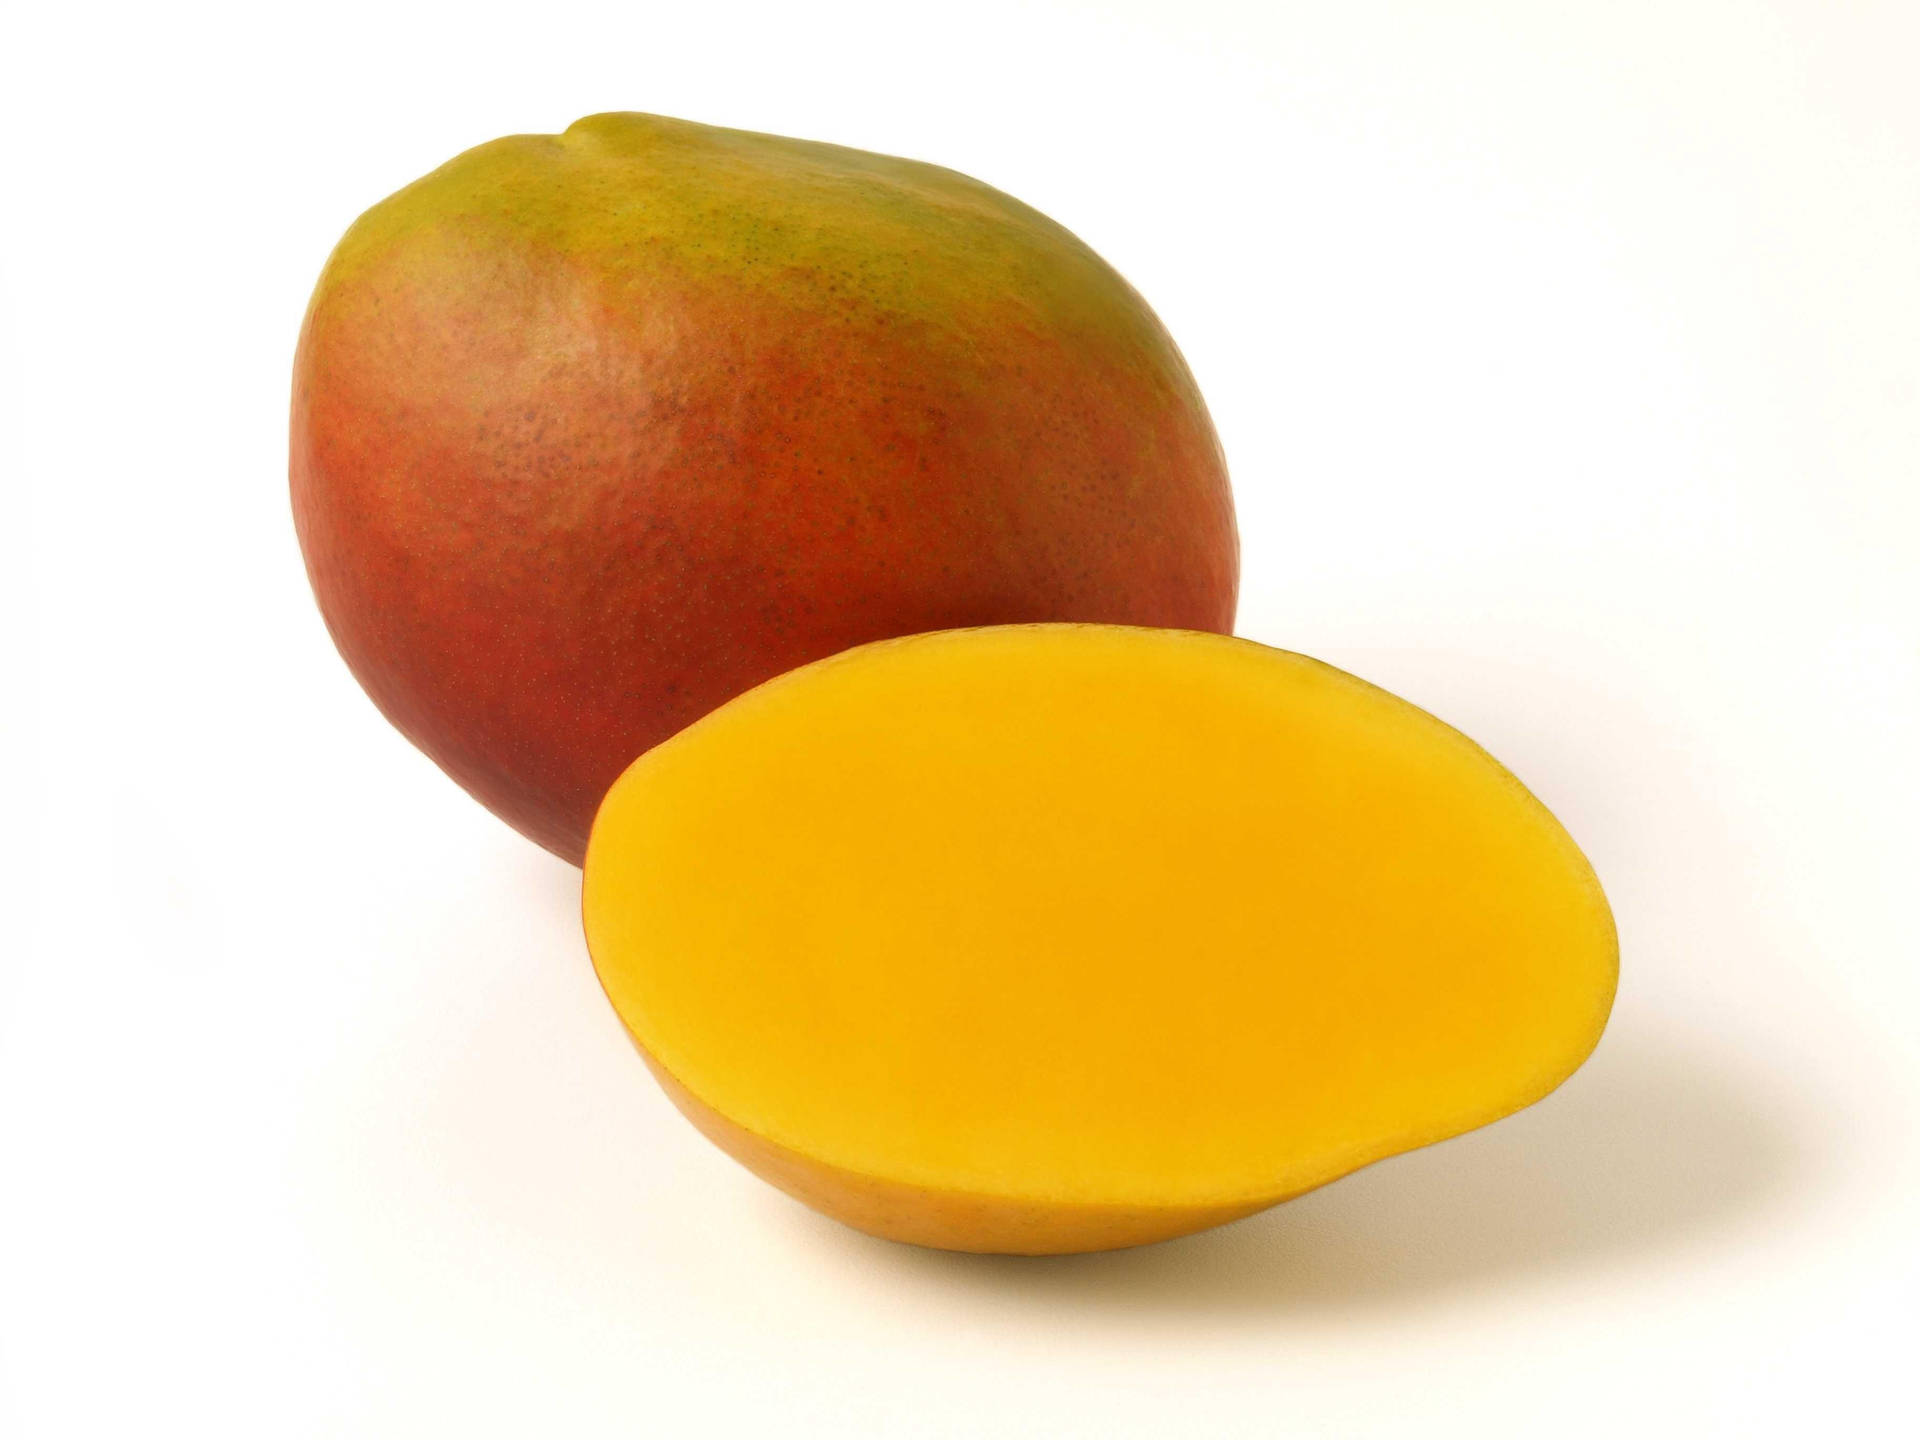 Ripe Mango Fruit On A Wooden Surface Background